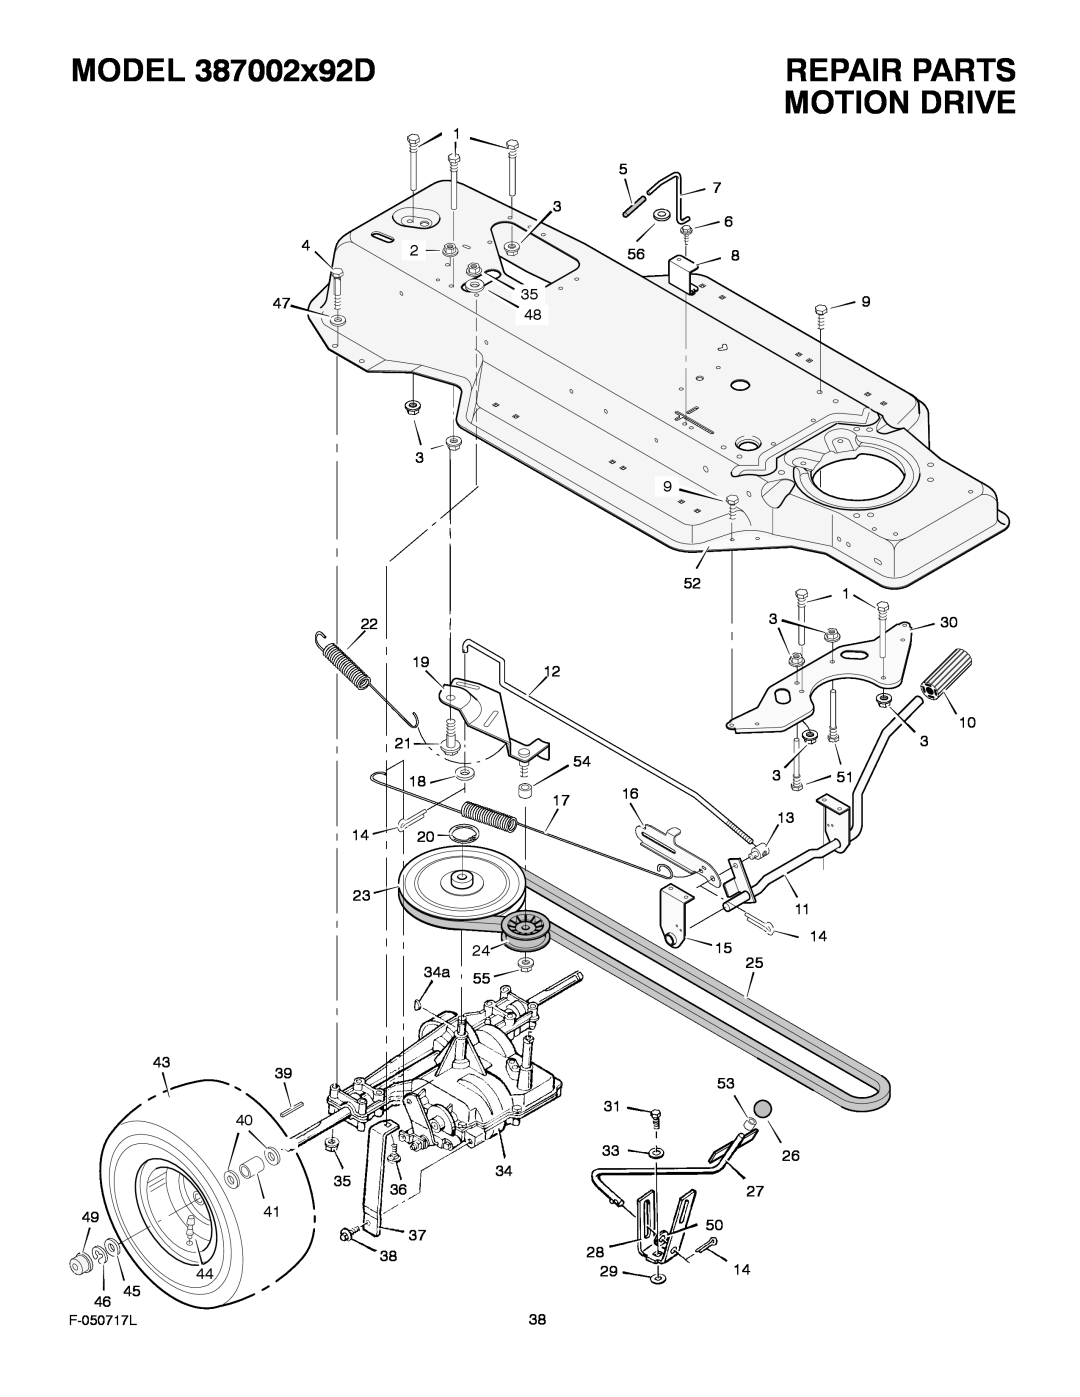 Murray manual Repair Parts Motion Drive, MODEL 387002x92D, 4339, 4941 